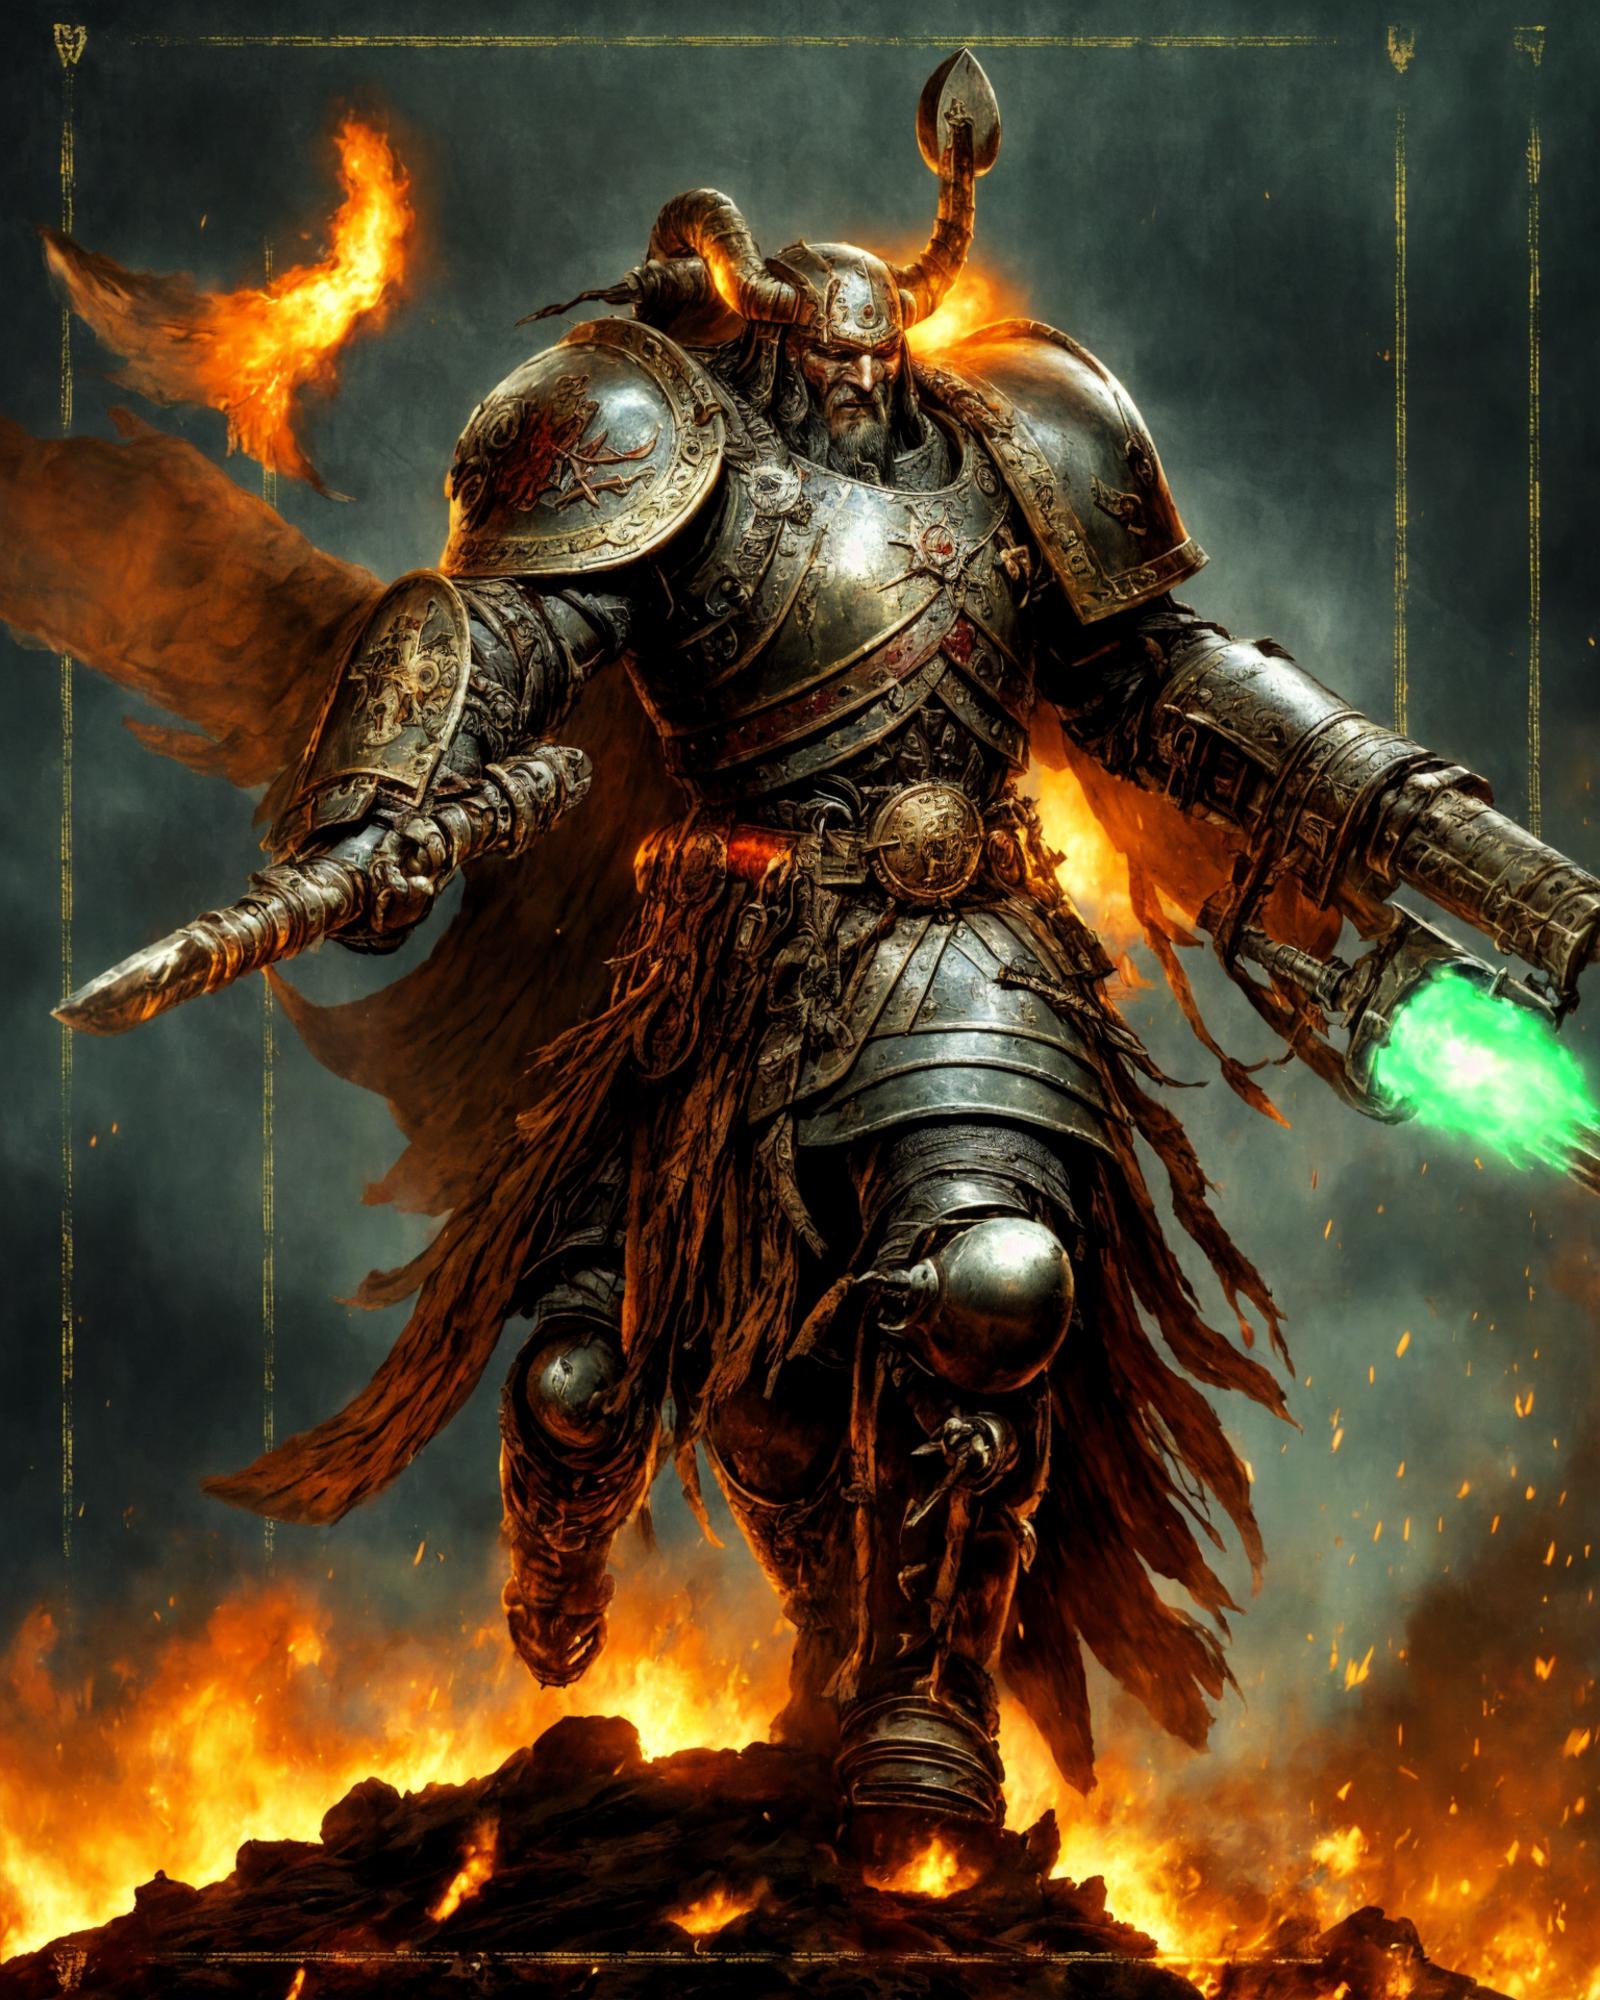 Warhammer40K image by rklaffehn